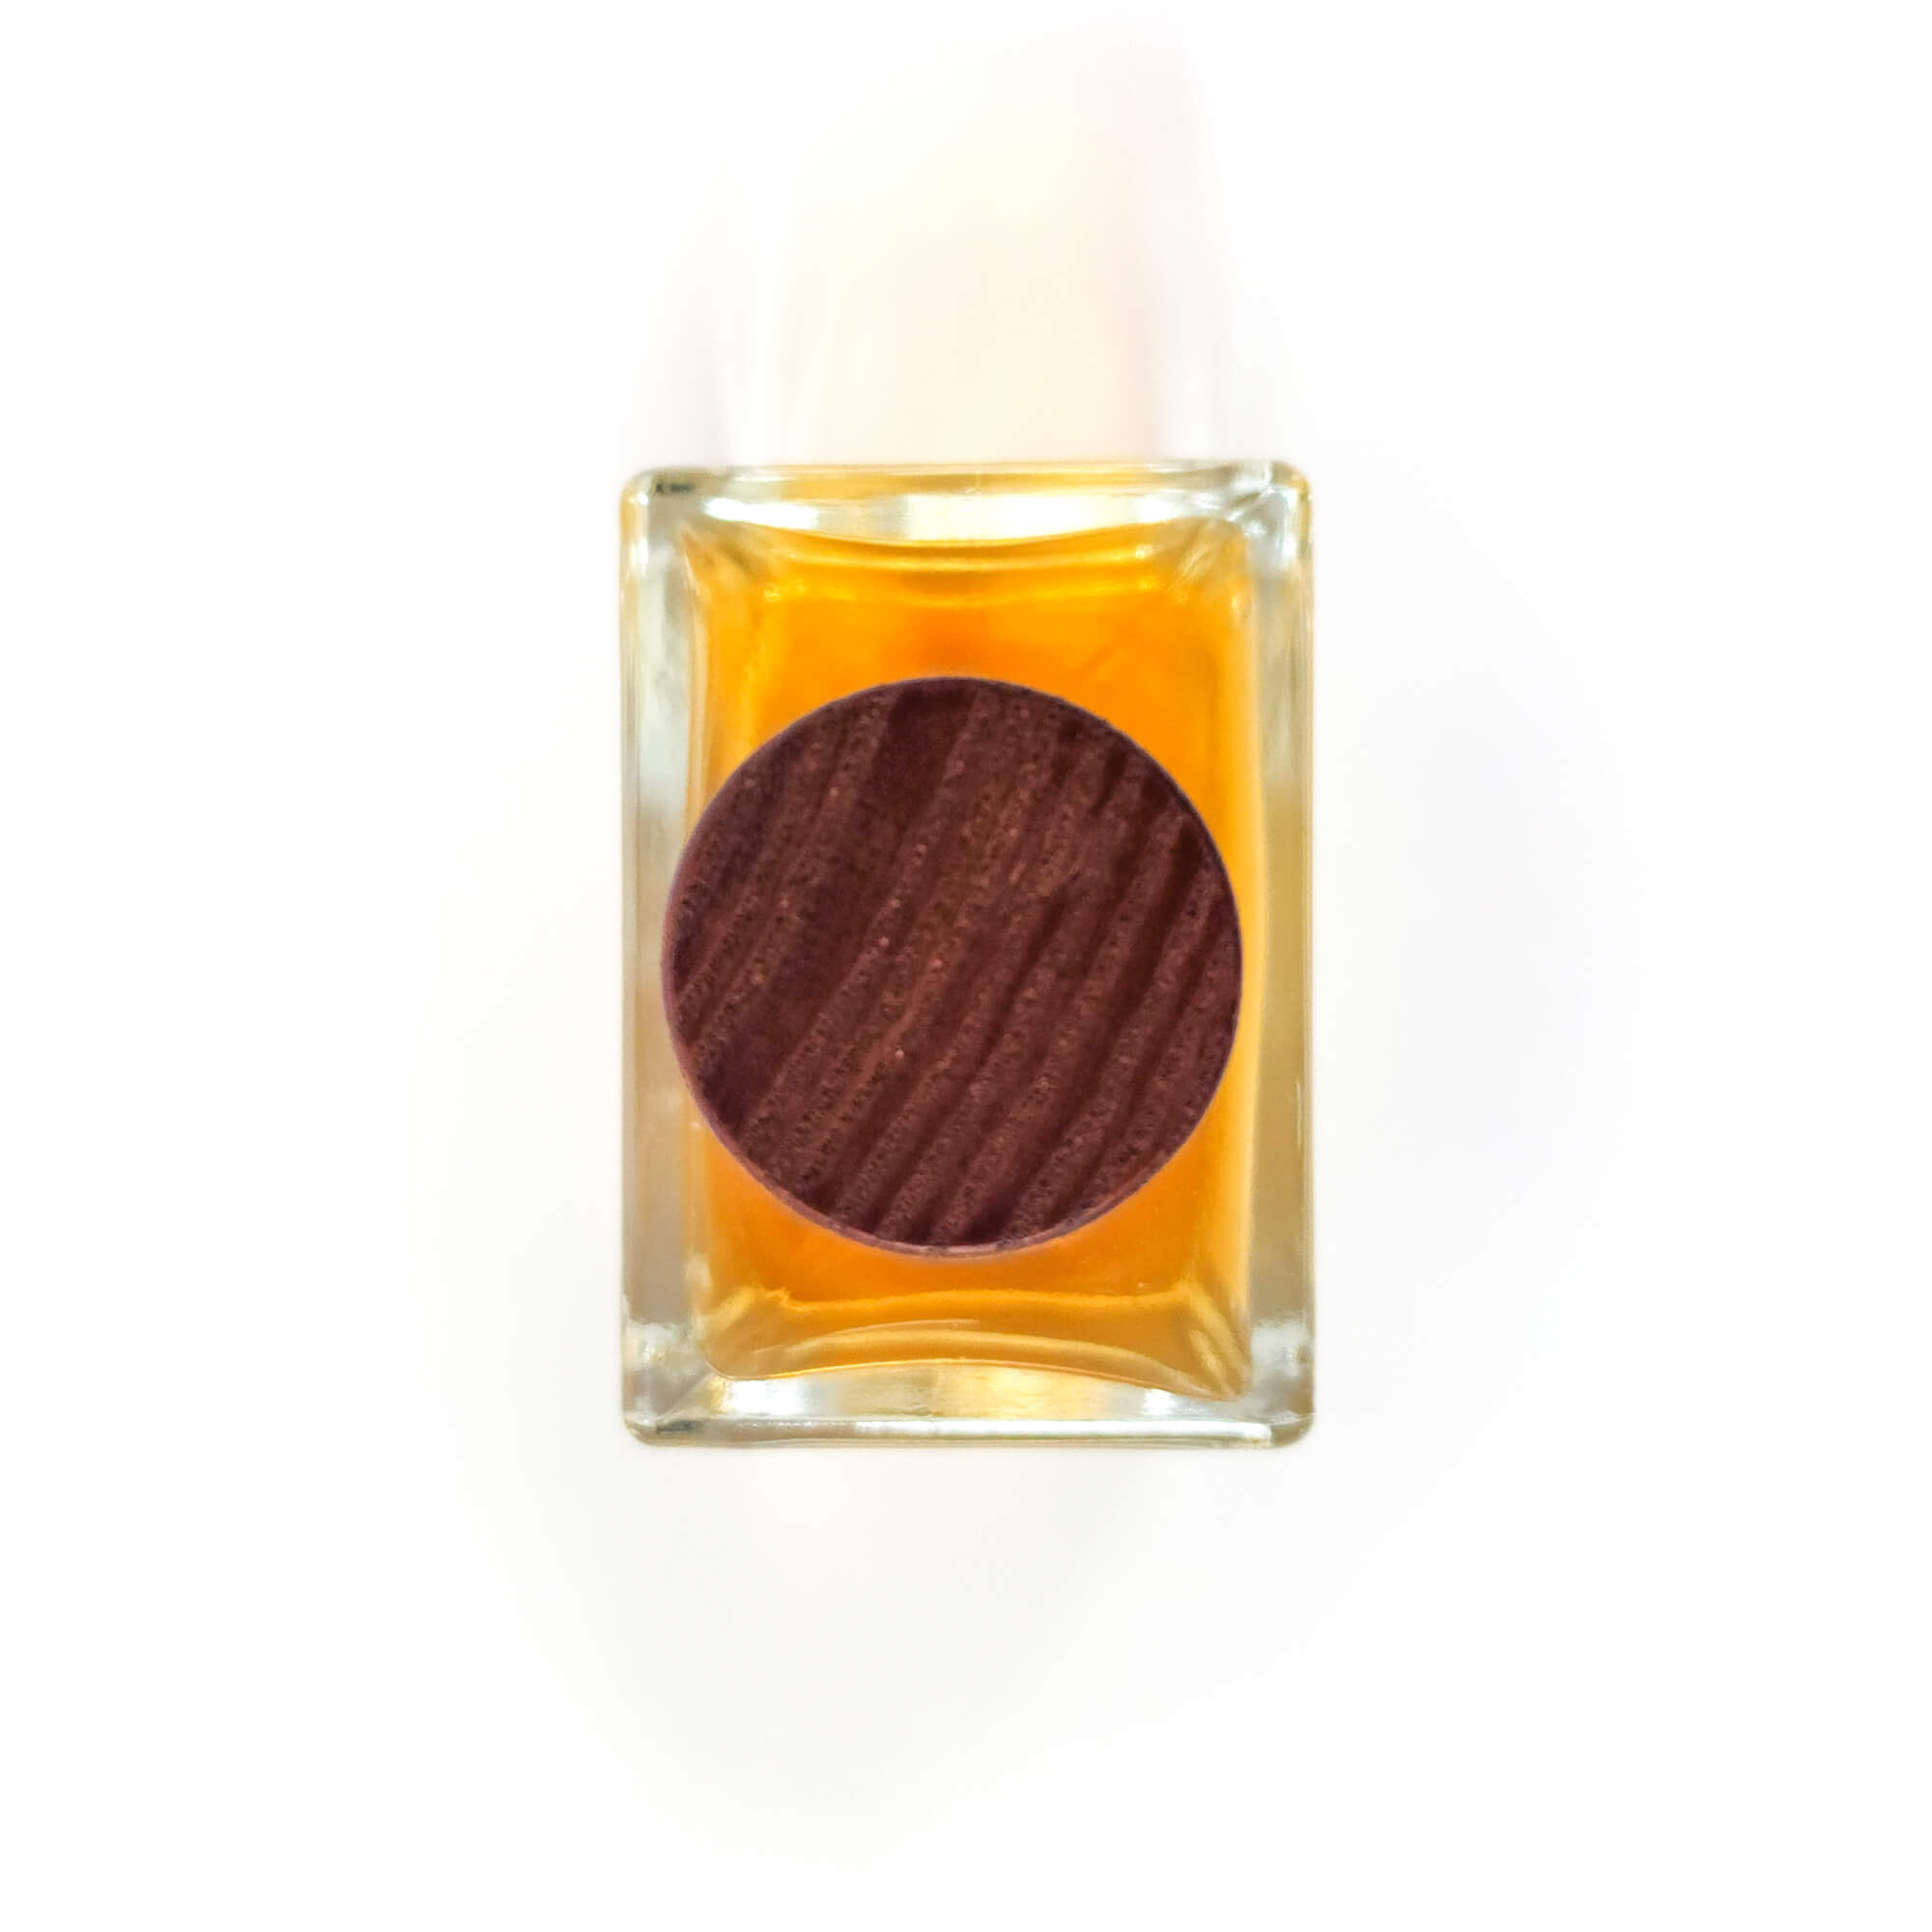 Caramel Kiss - Original Creation Perfume